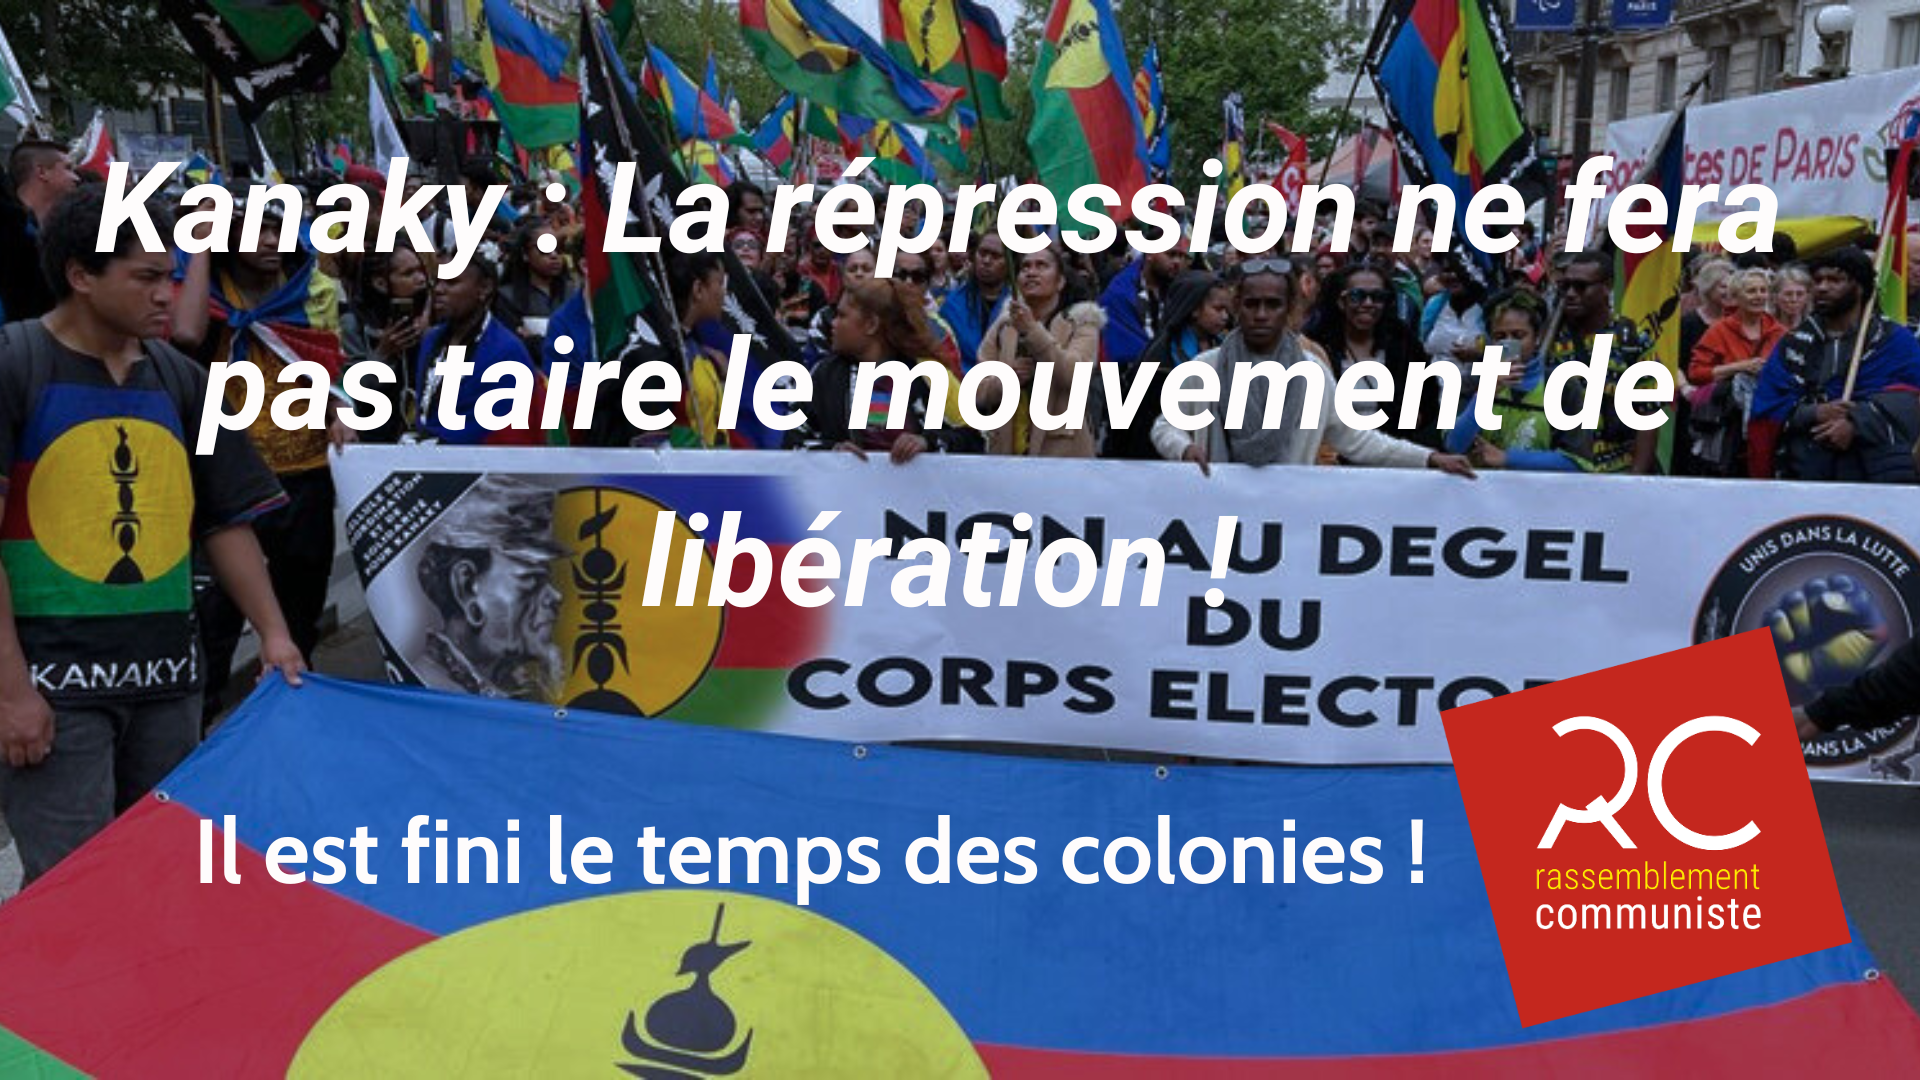 Kanaky-La-repression-ne-fera-pas-taire-le-mouvement-de-liberation-1-1